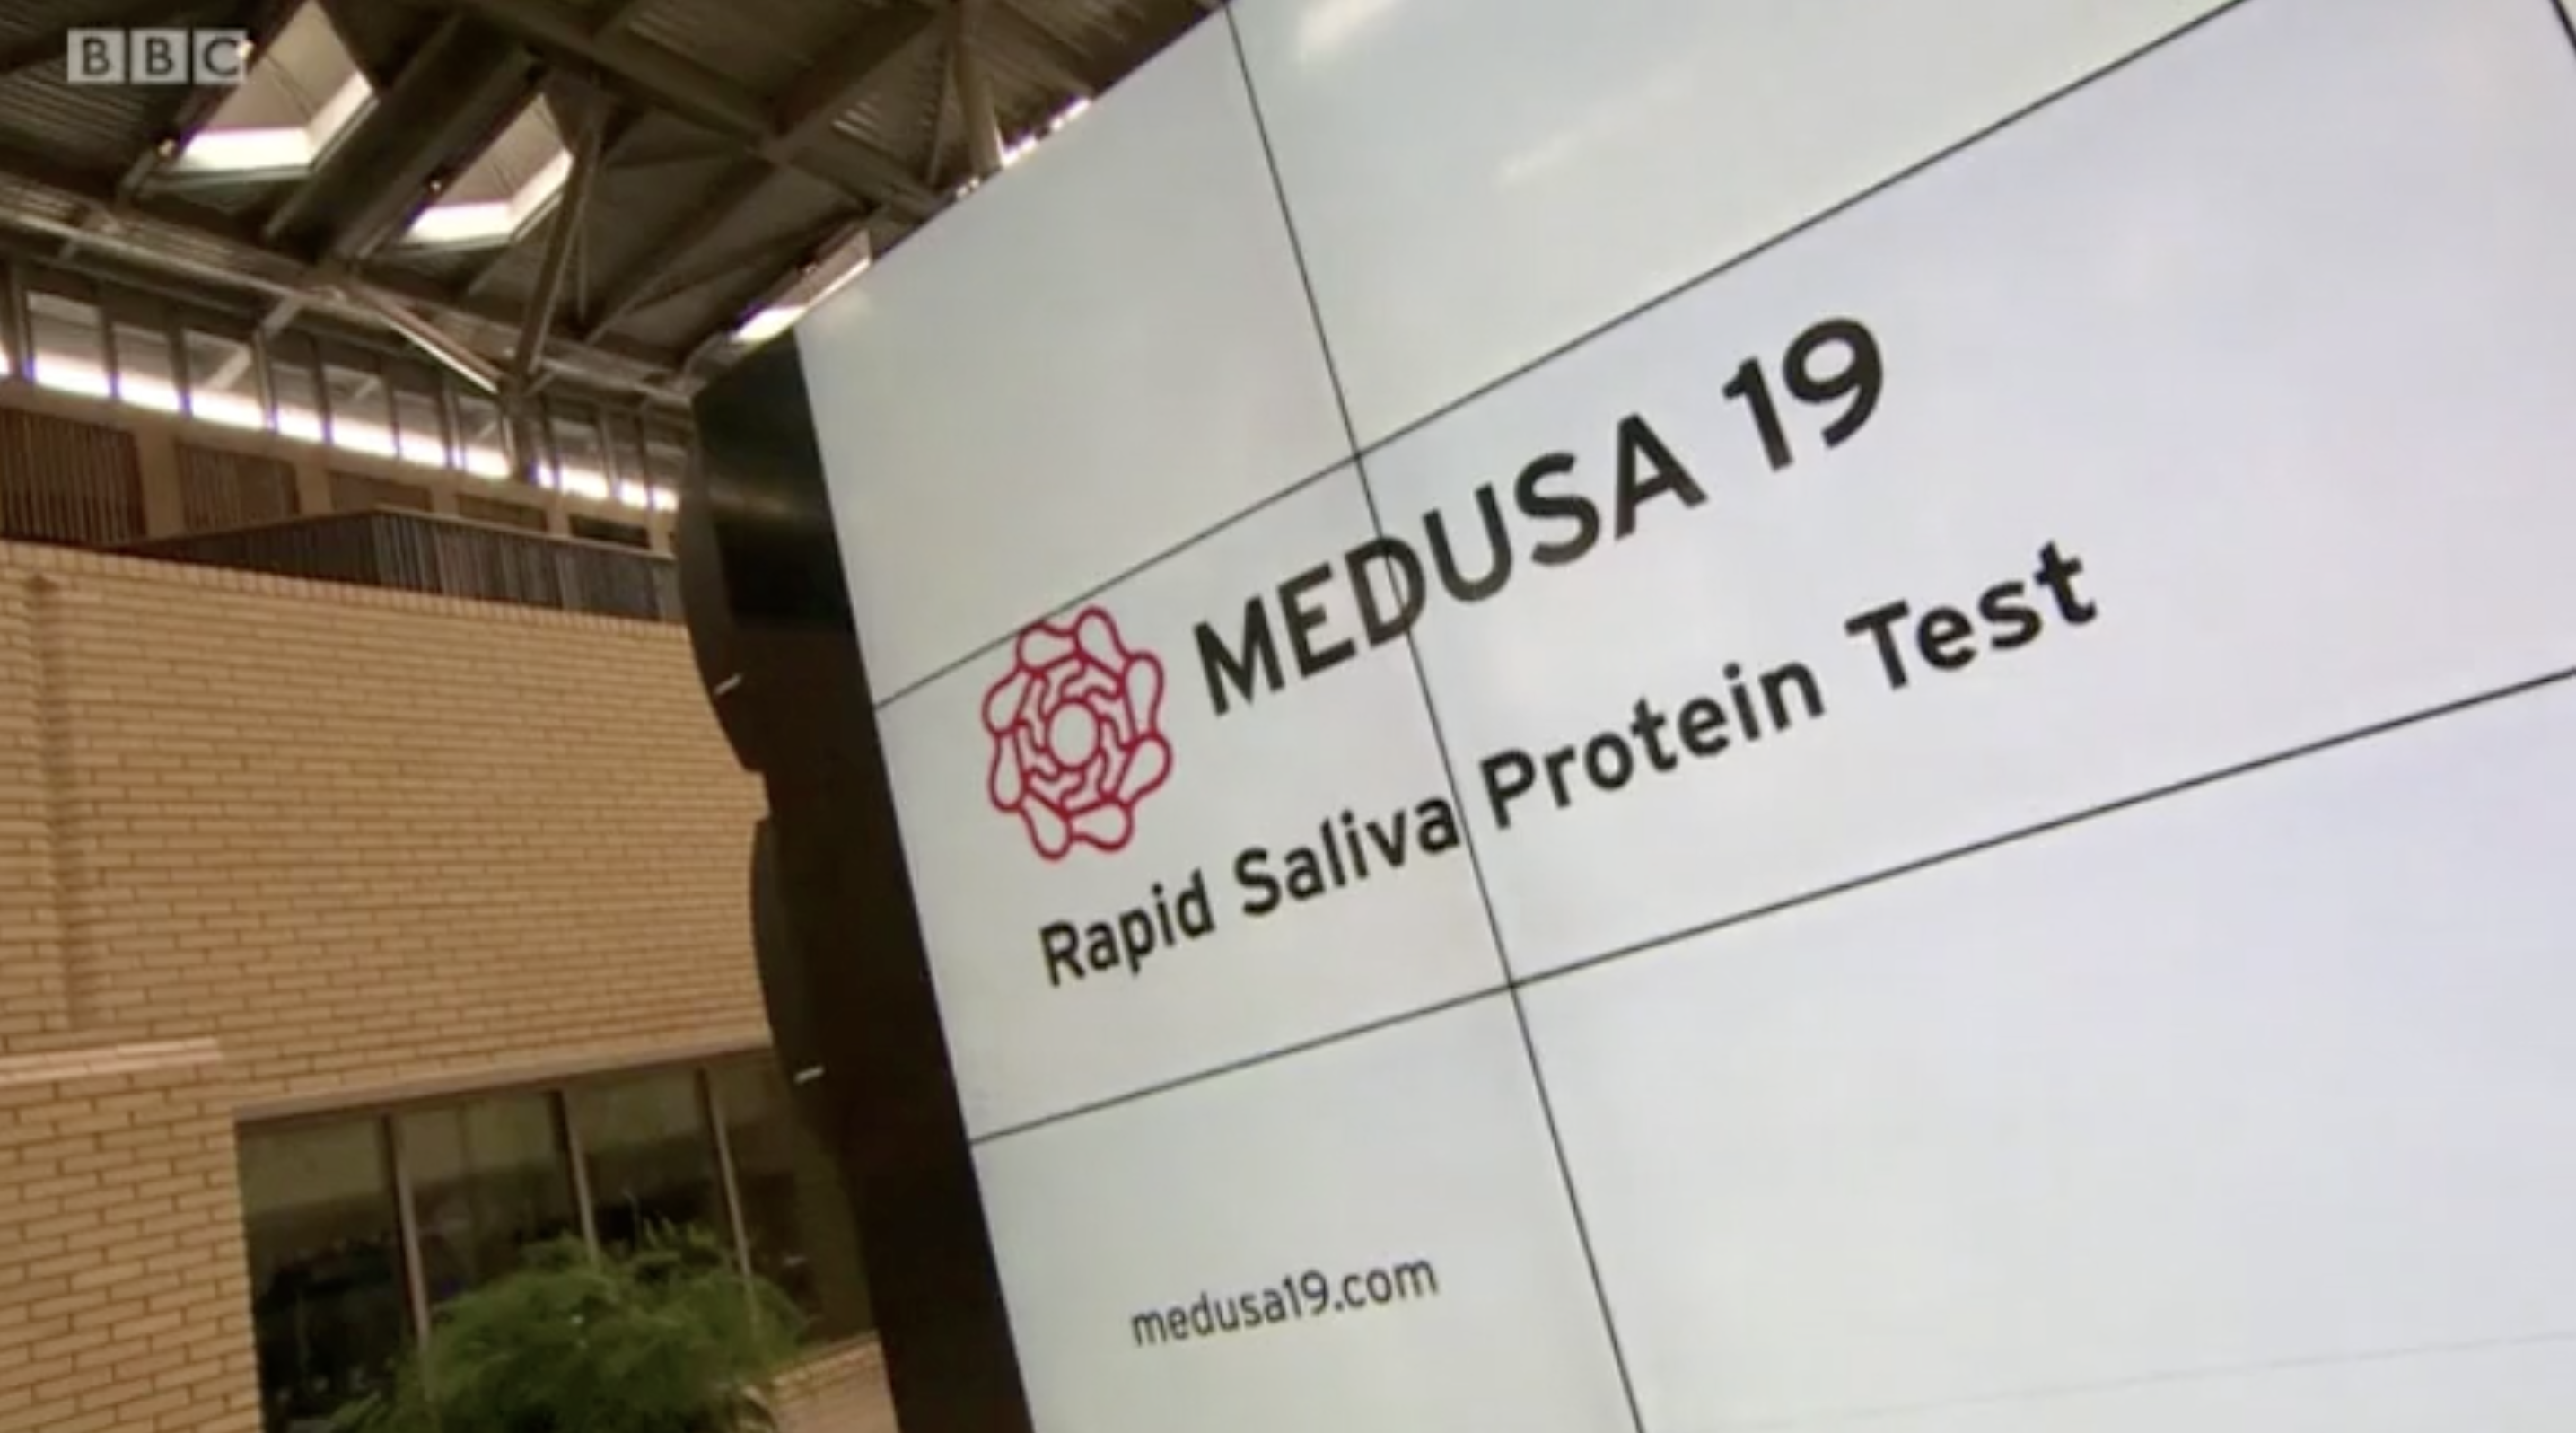 Medusa 19 rapid salive protein test